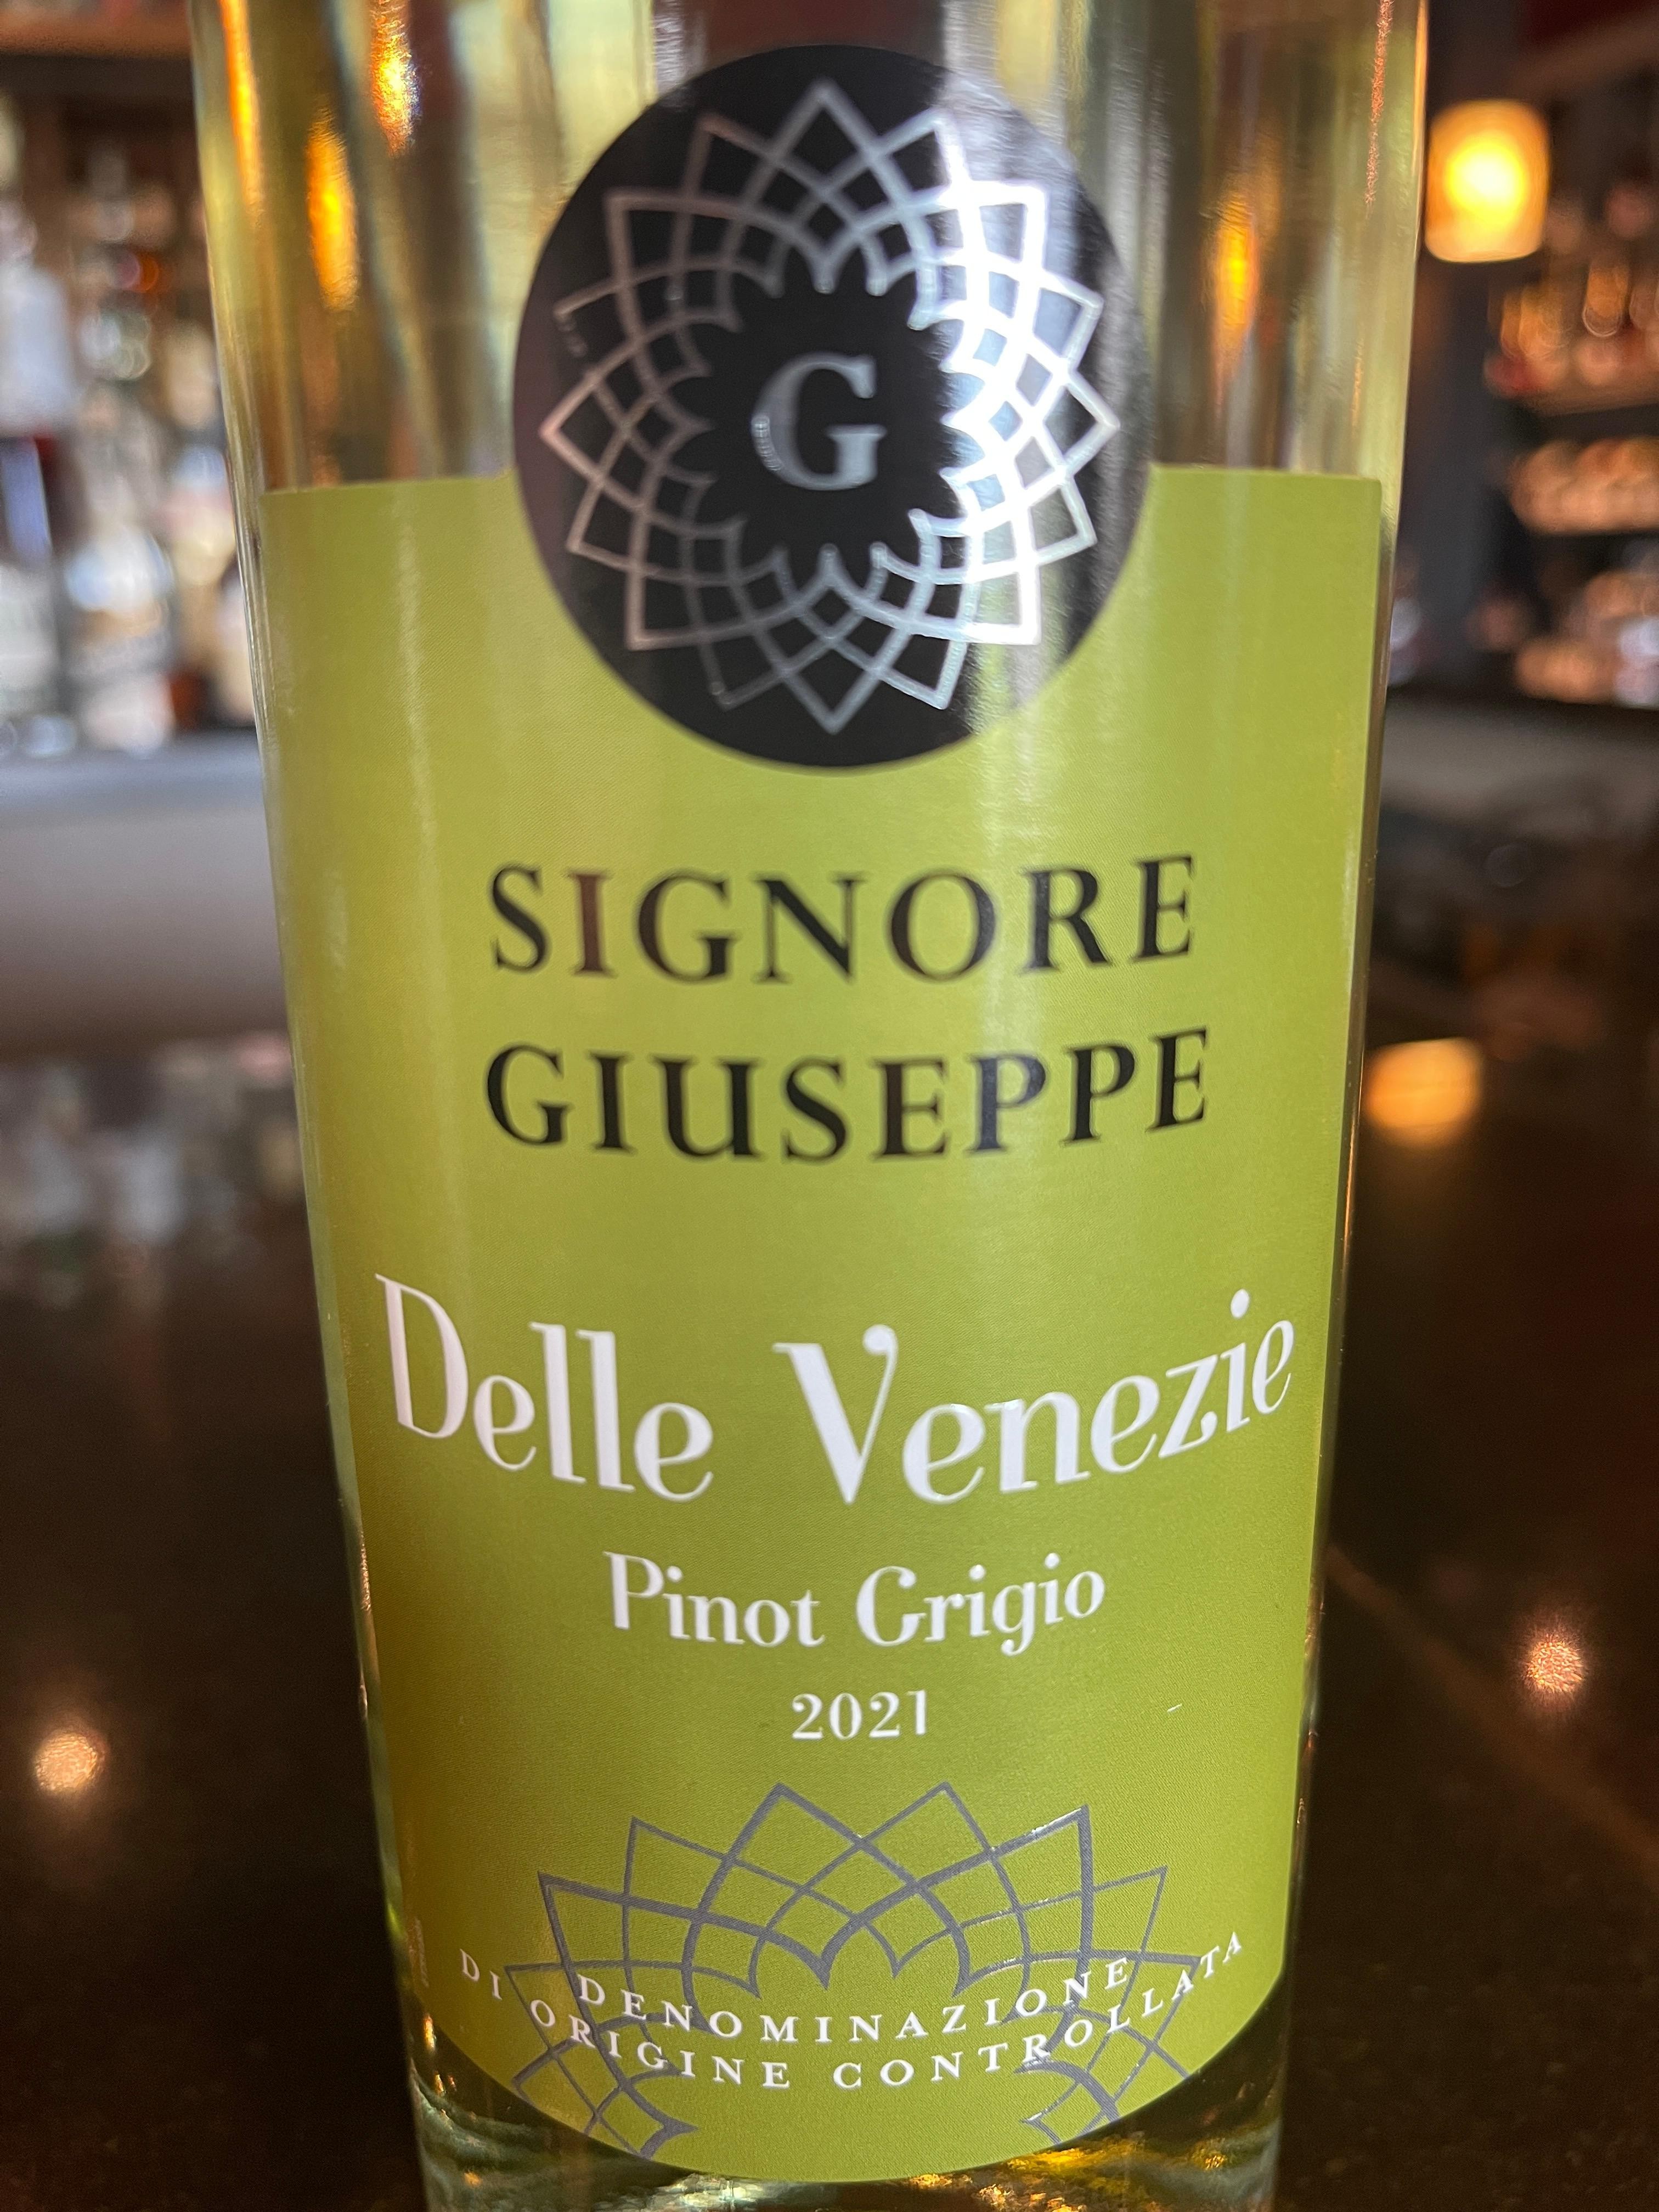 #1 - Signore Giuseppe Pinot Grigio, 2021, Delle Venezie, Italy